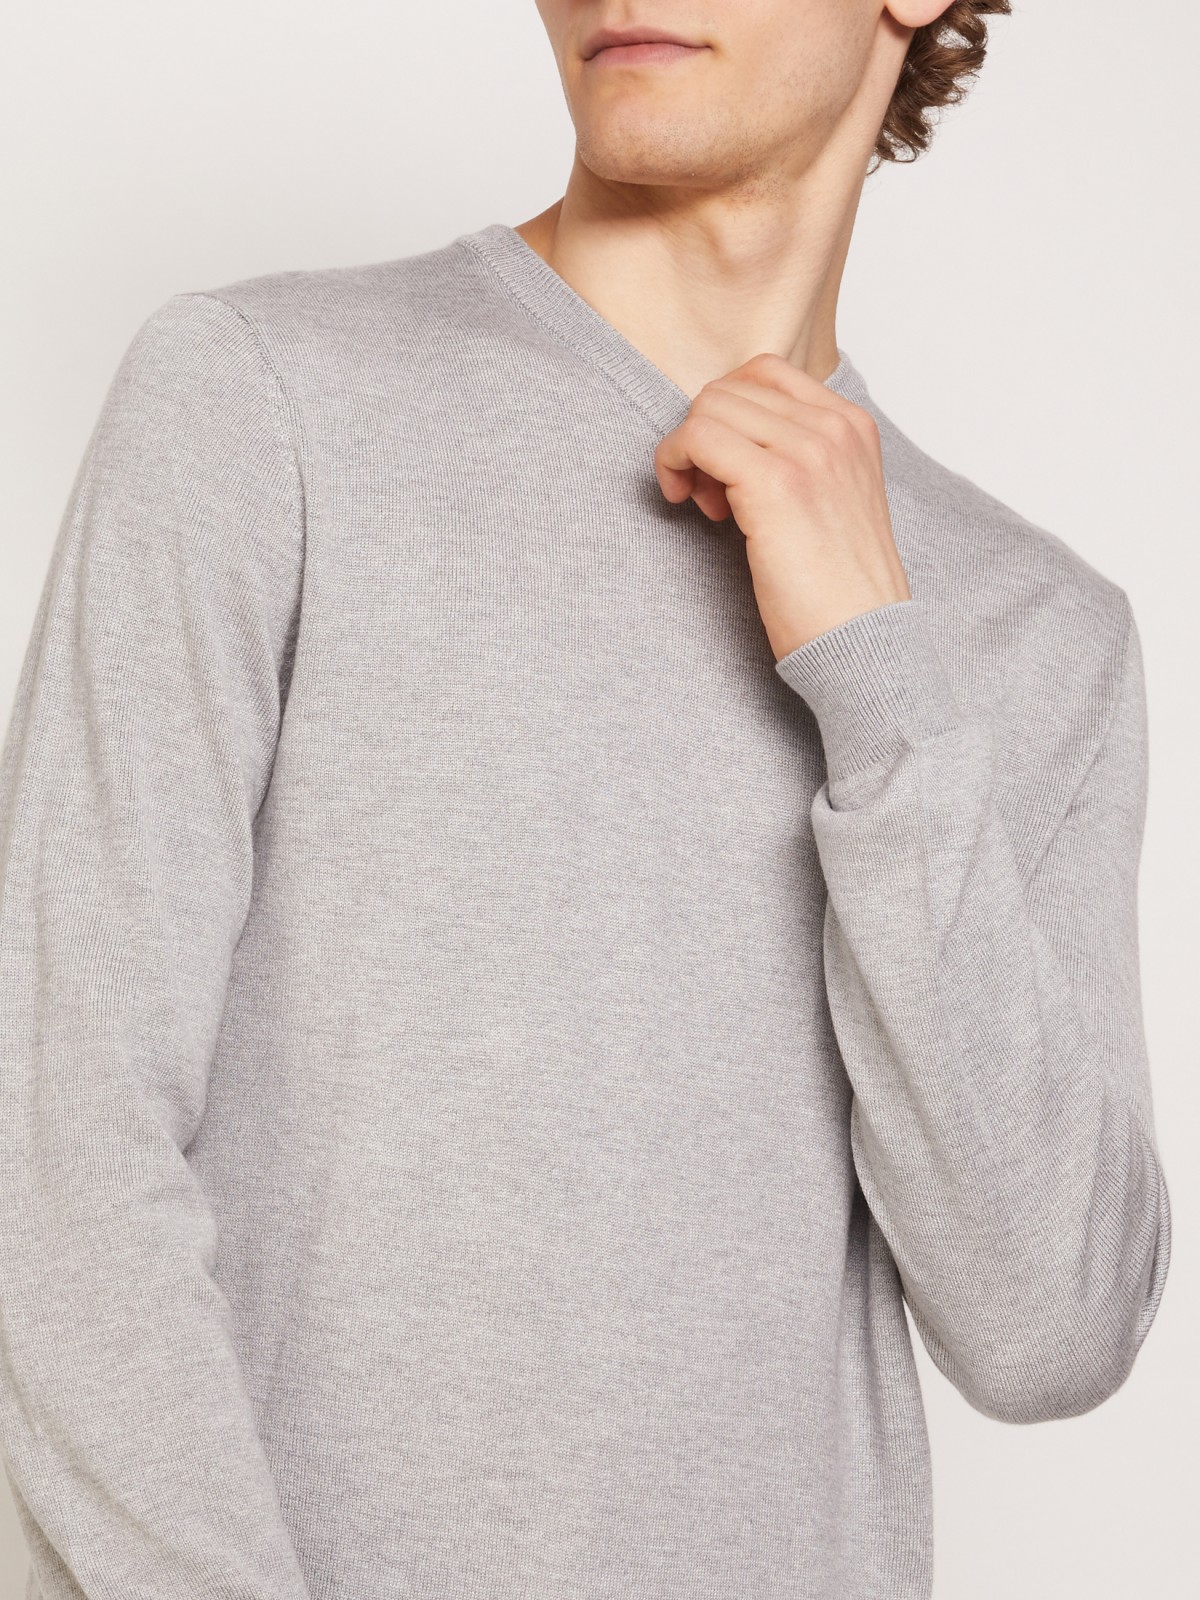 Пуловер zolla 011346163022, цвет серый, размер S - фото 5